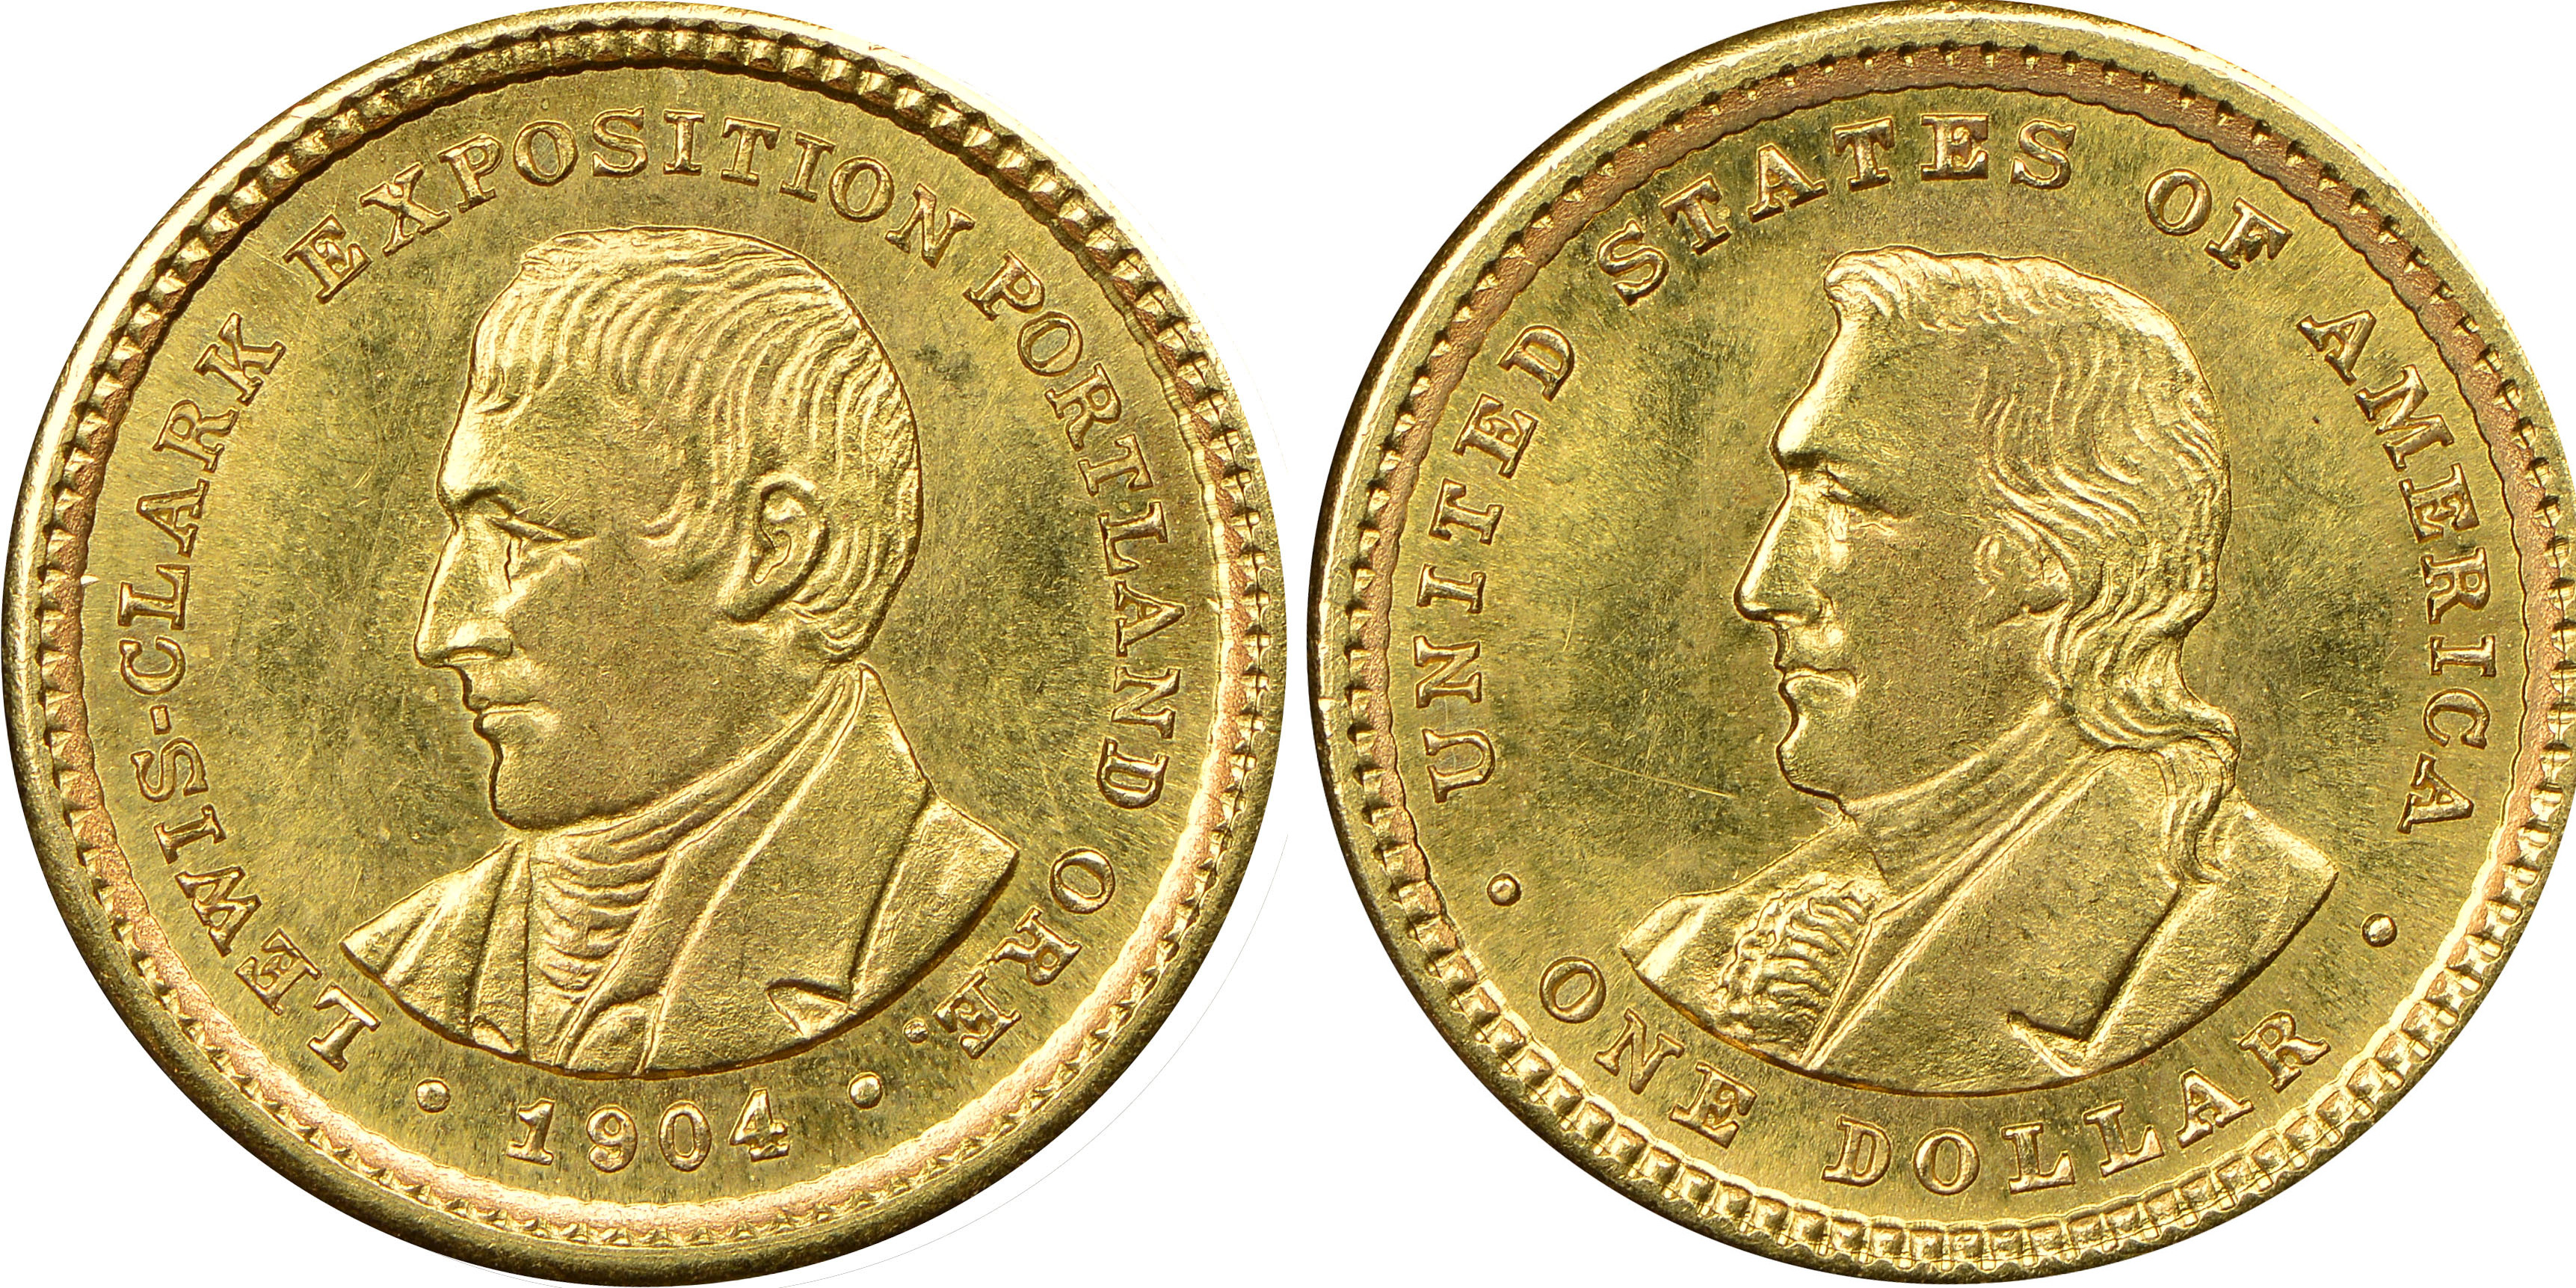 Amerikansk minnemynt i gull - $1 Lewis & Clark 1904-1905 